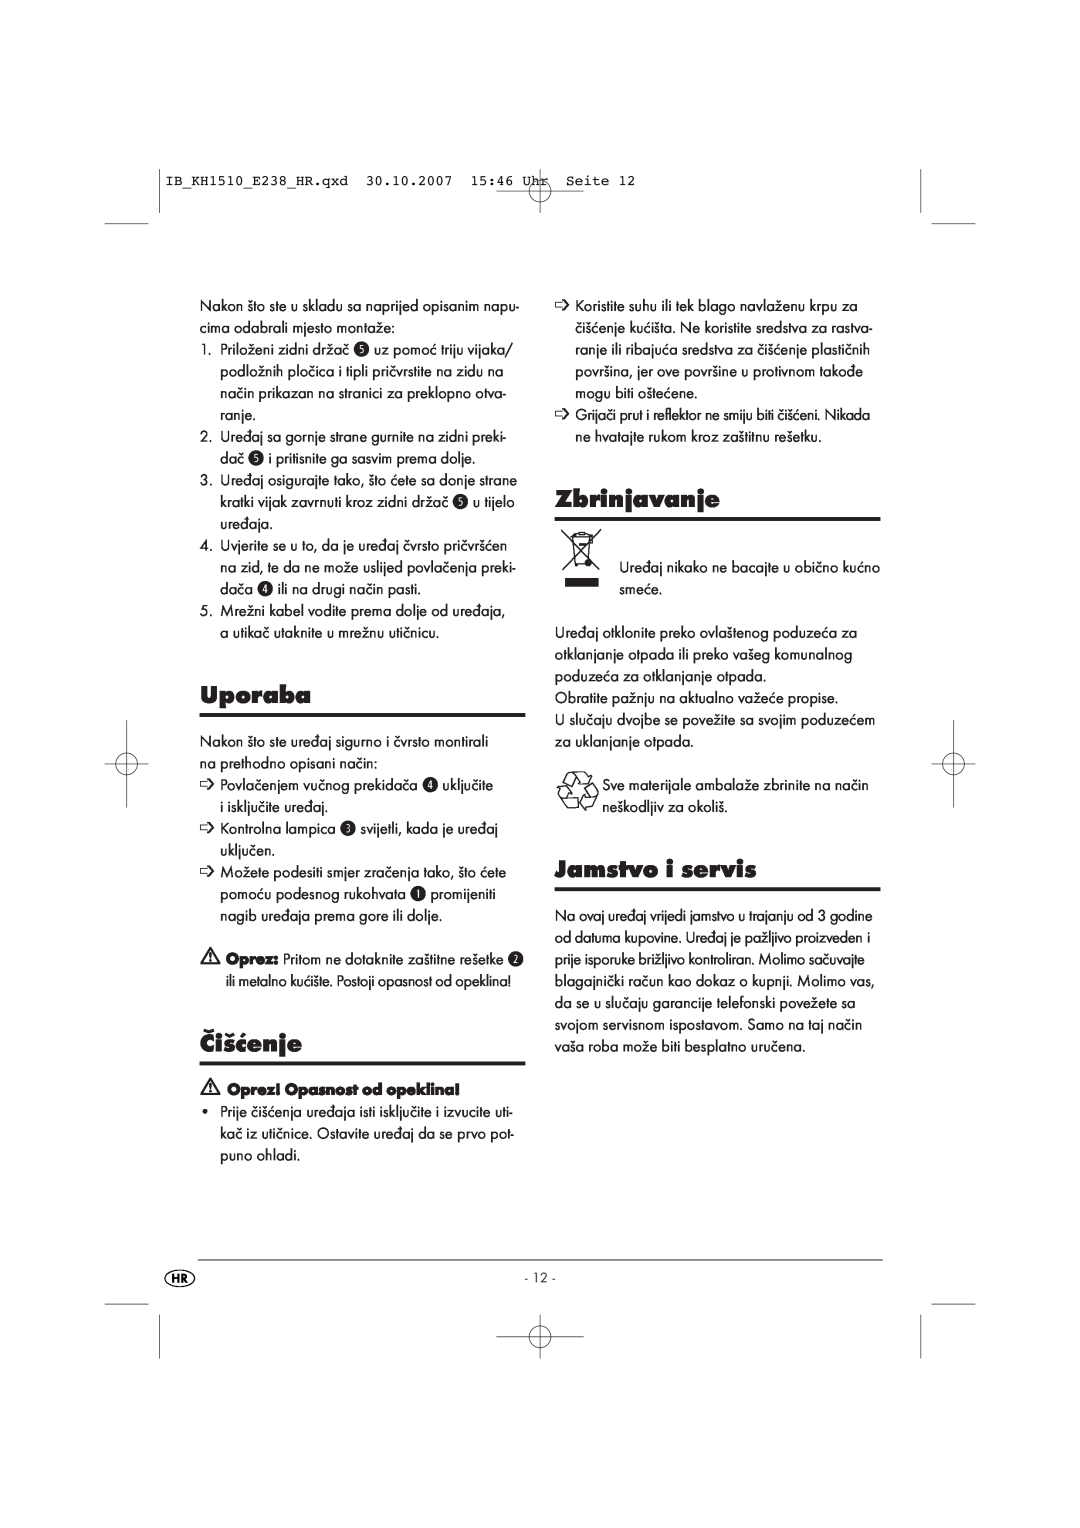 Kompernass KH 1510 manual Uporaba, Čišćenje, Zbrinjavanje, Jamstvo i servis 